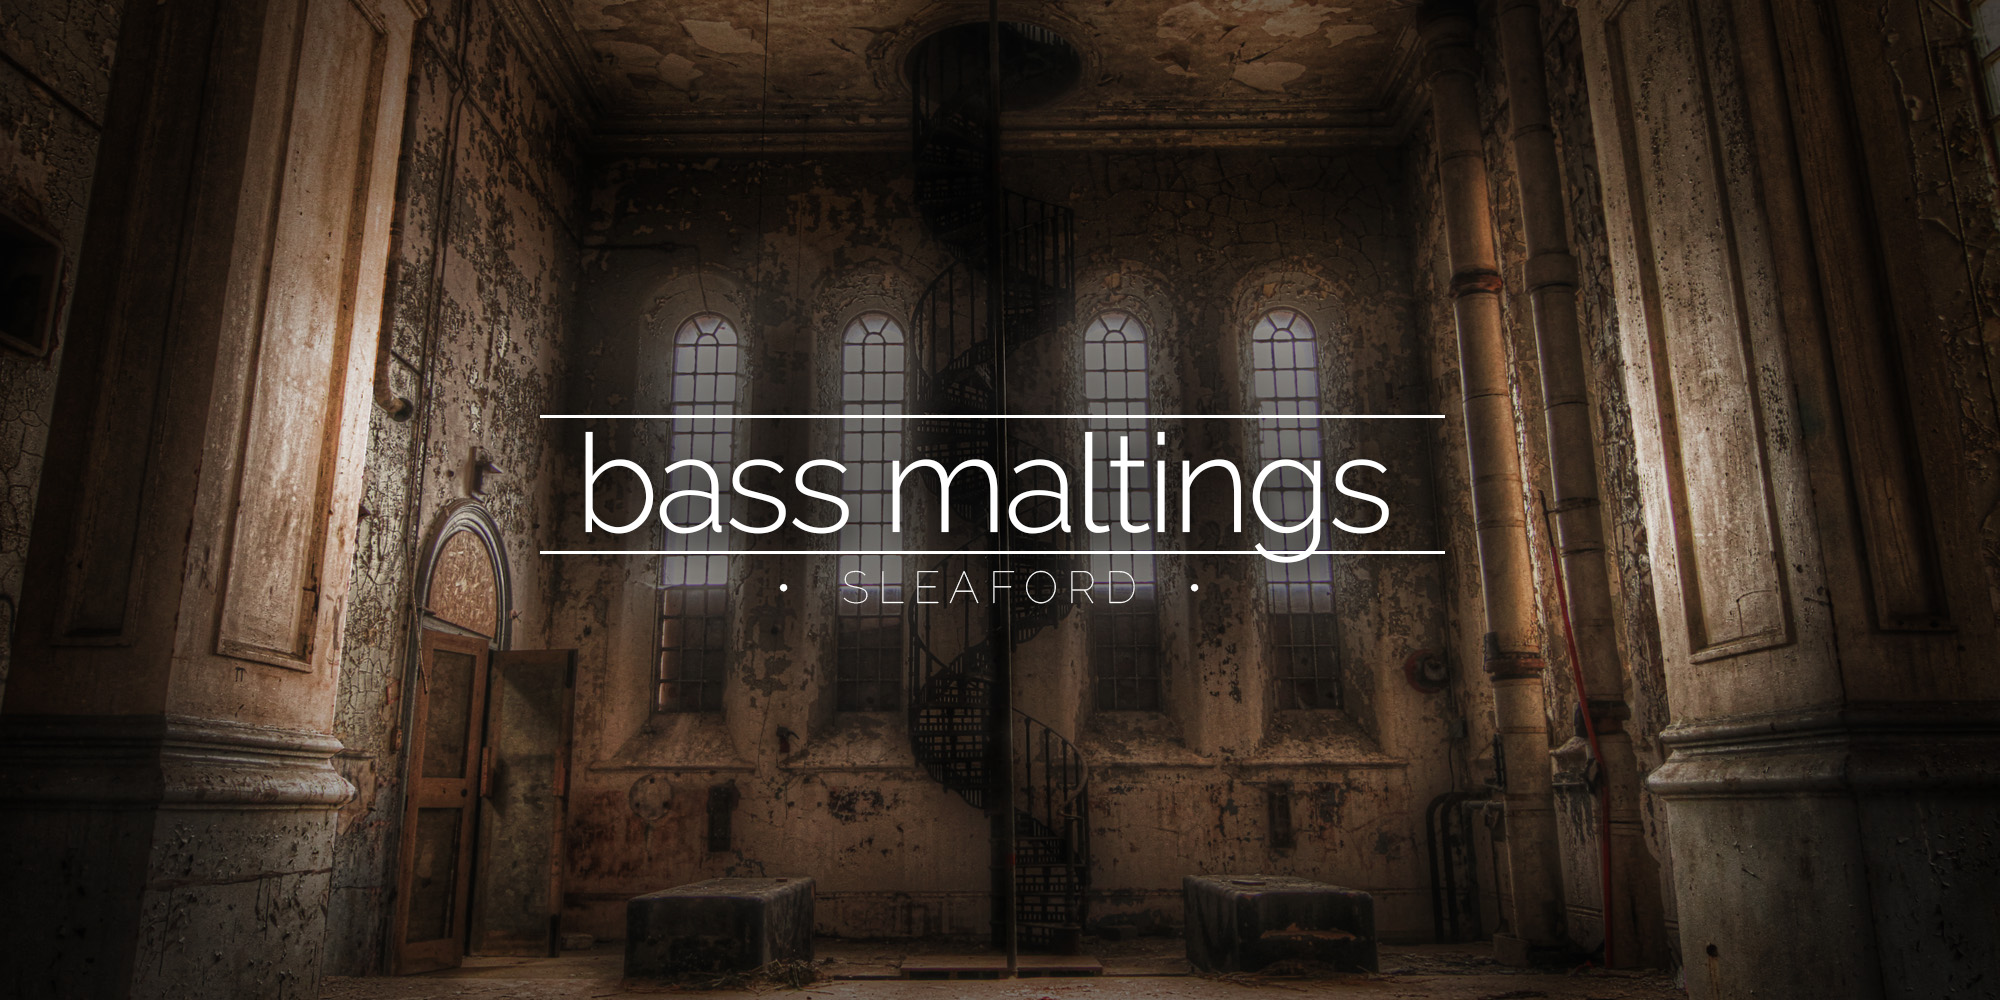 Bass Maltings, Sleaford